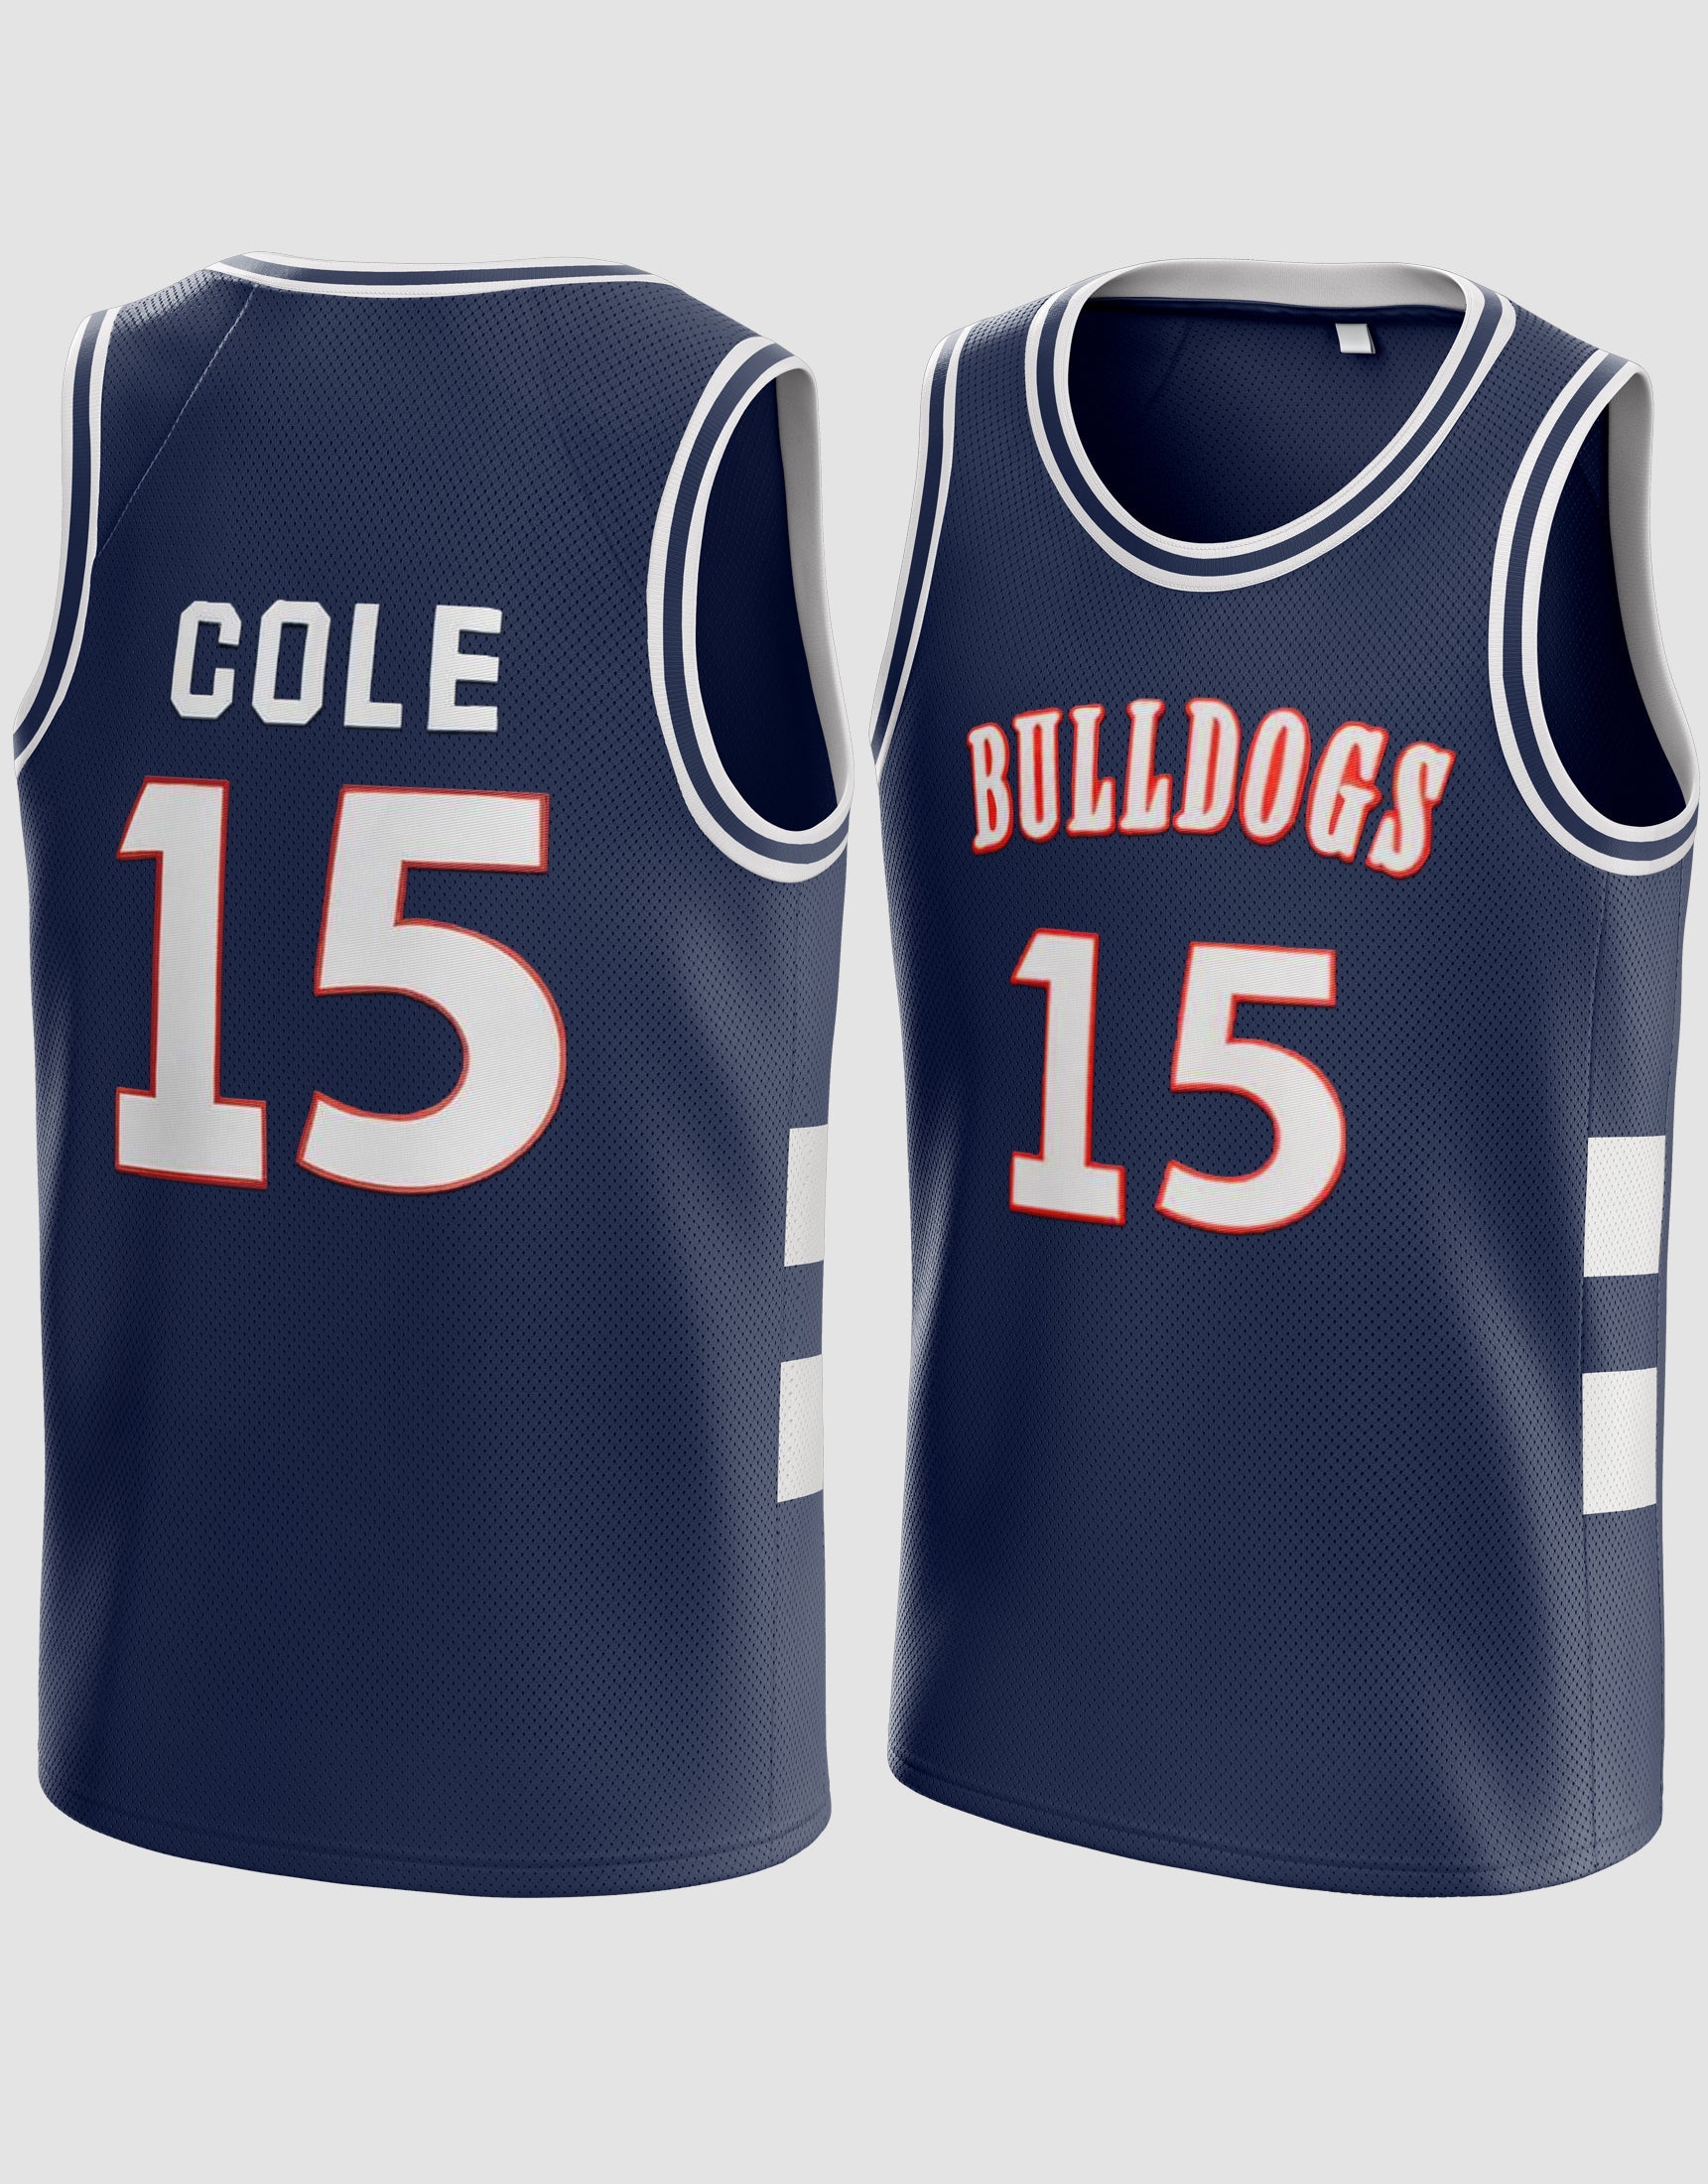 J Cole Bulldogs #15 Camiseta de baloncesto de la escuela secundaria